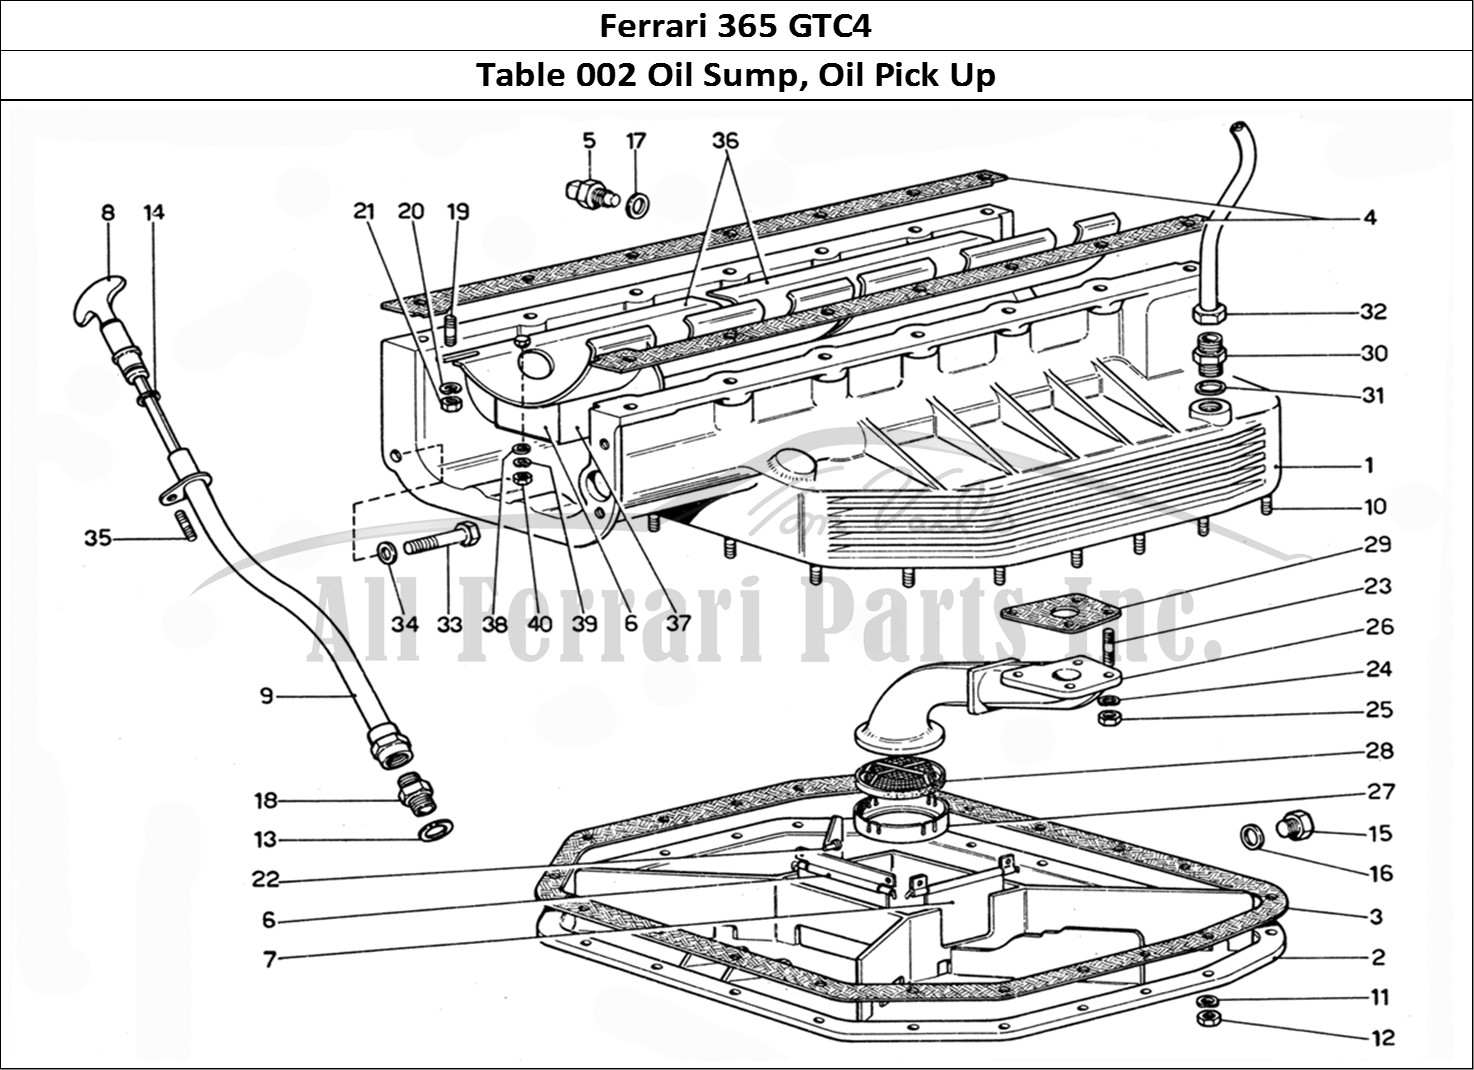 Ferrari Parts Ferrari 365 GTC4 (Mechanical) Page 002 Sump pan - Oil pick up